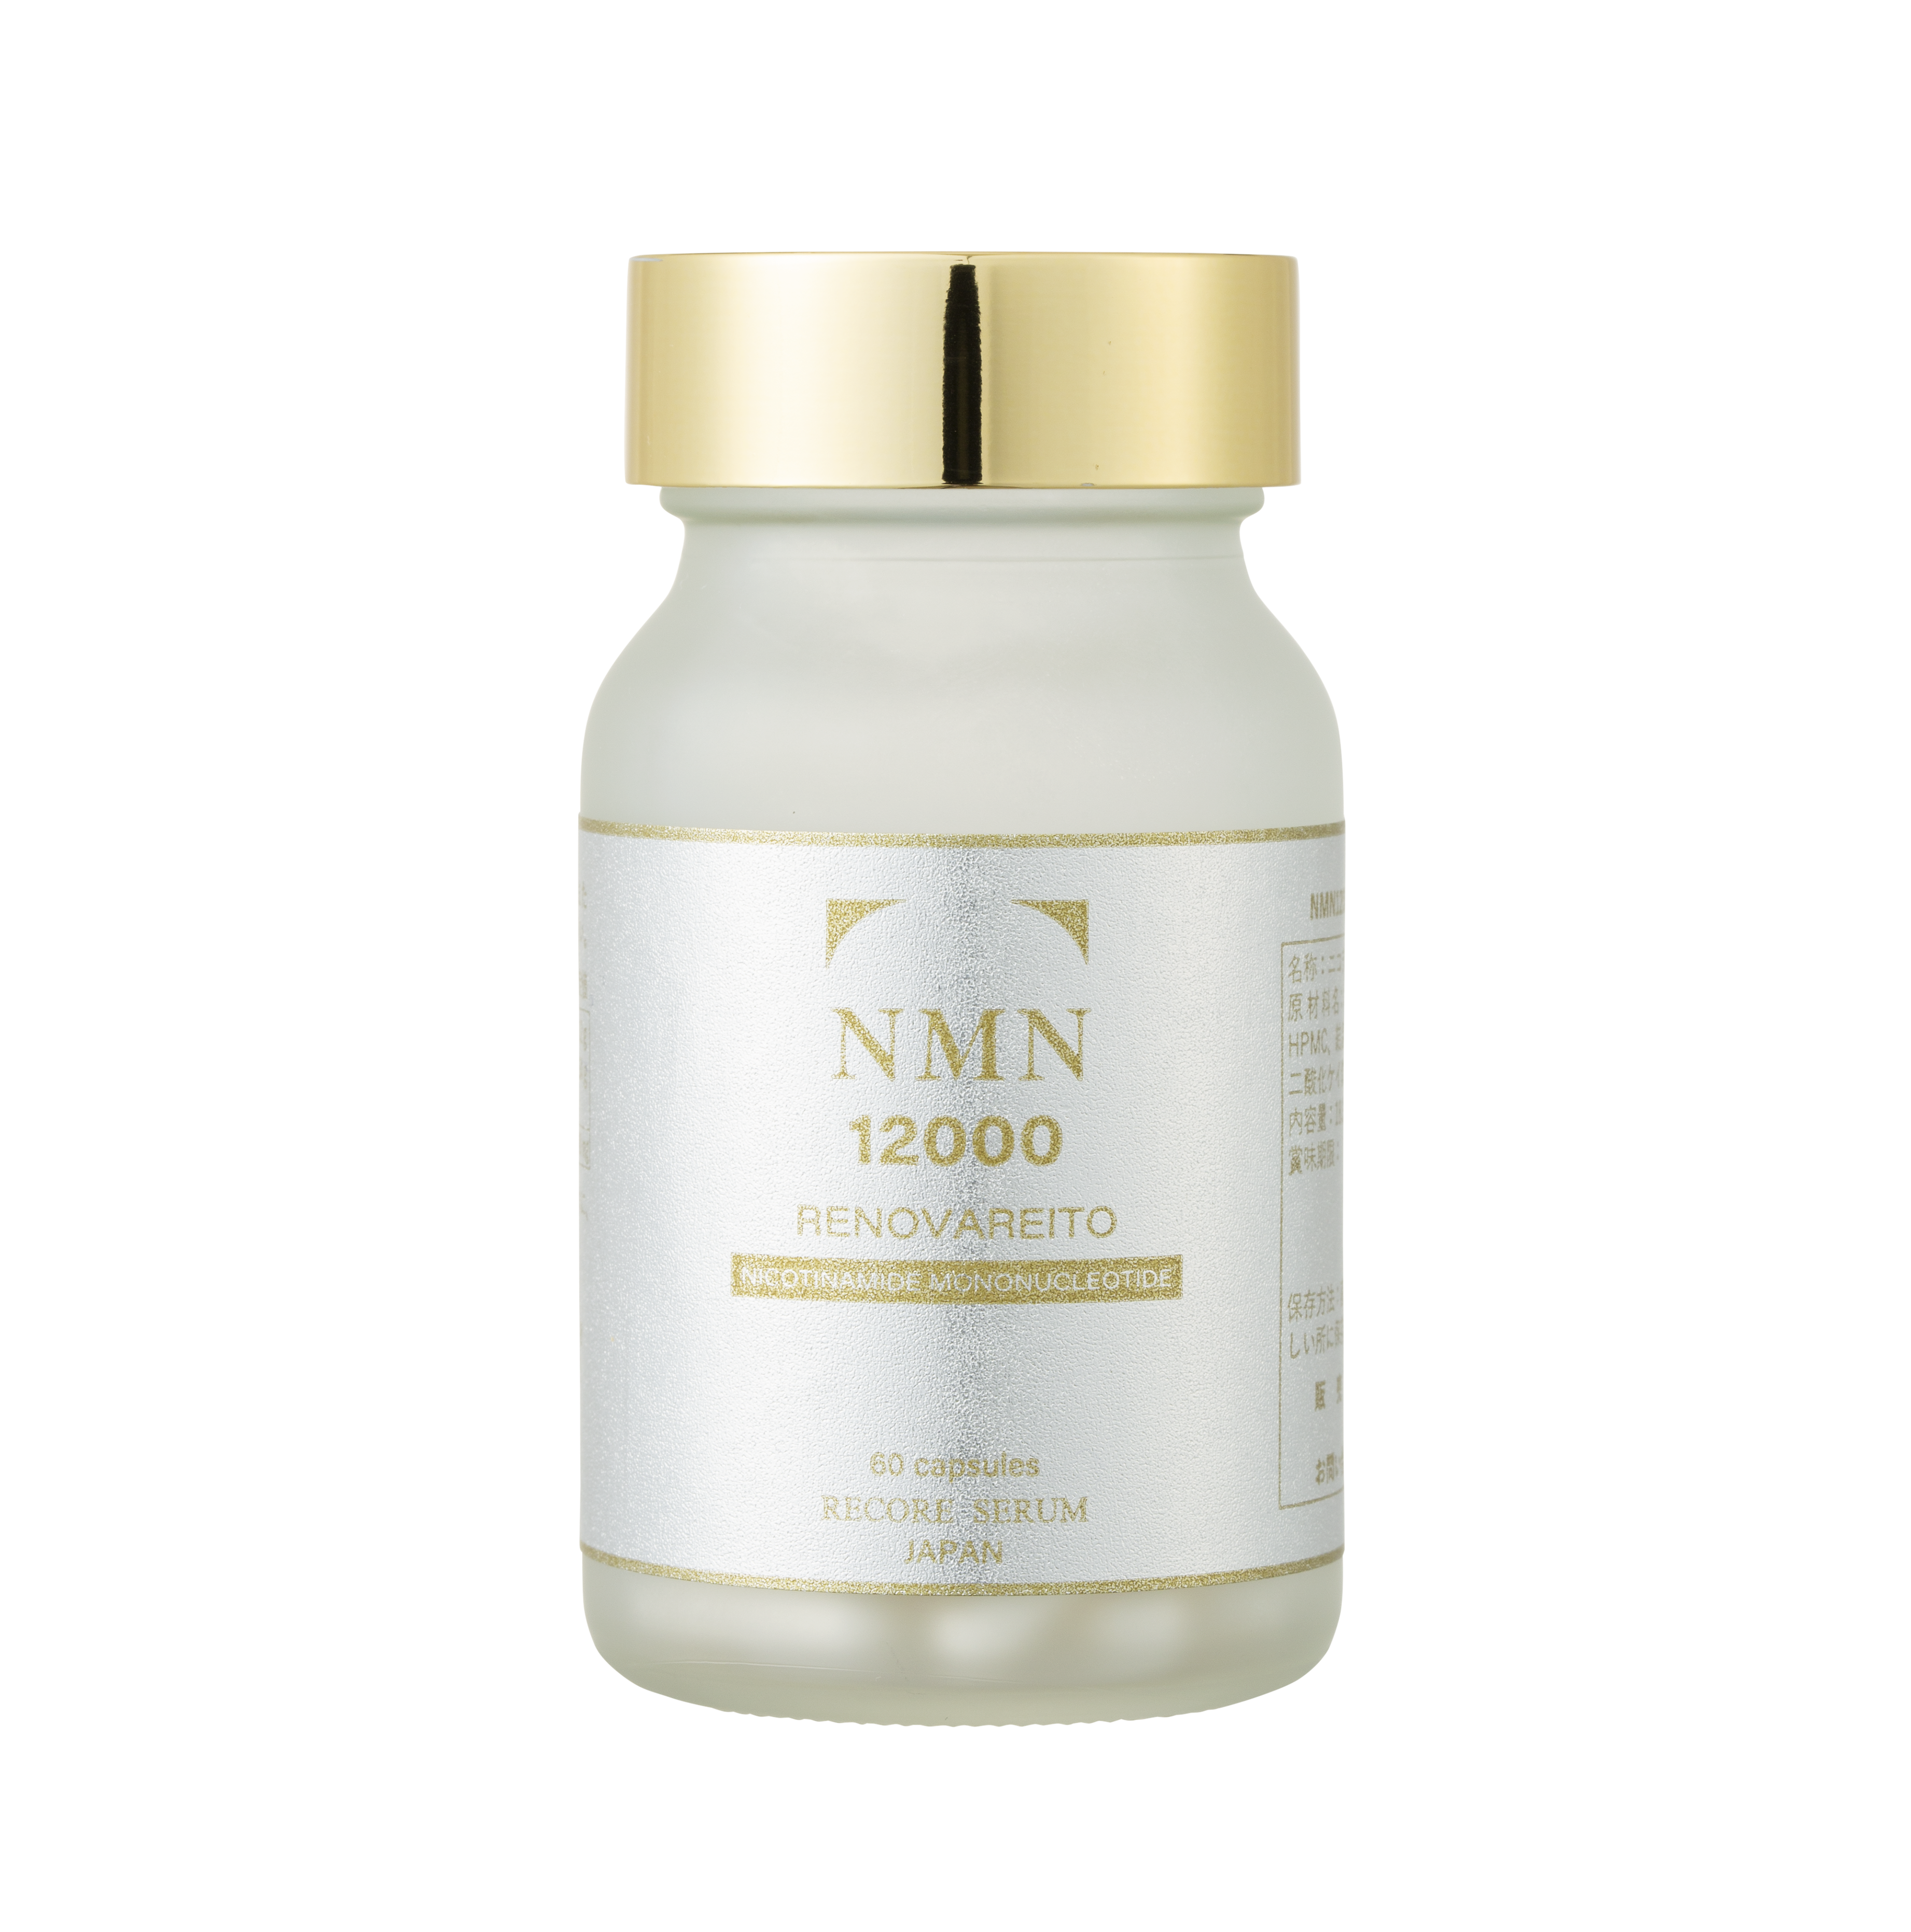 NMN 12000 Nicotinamide Mononucleotide